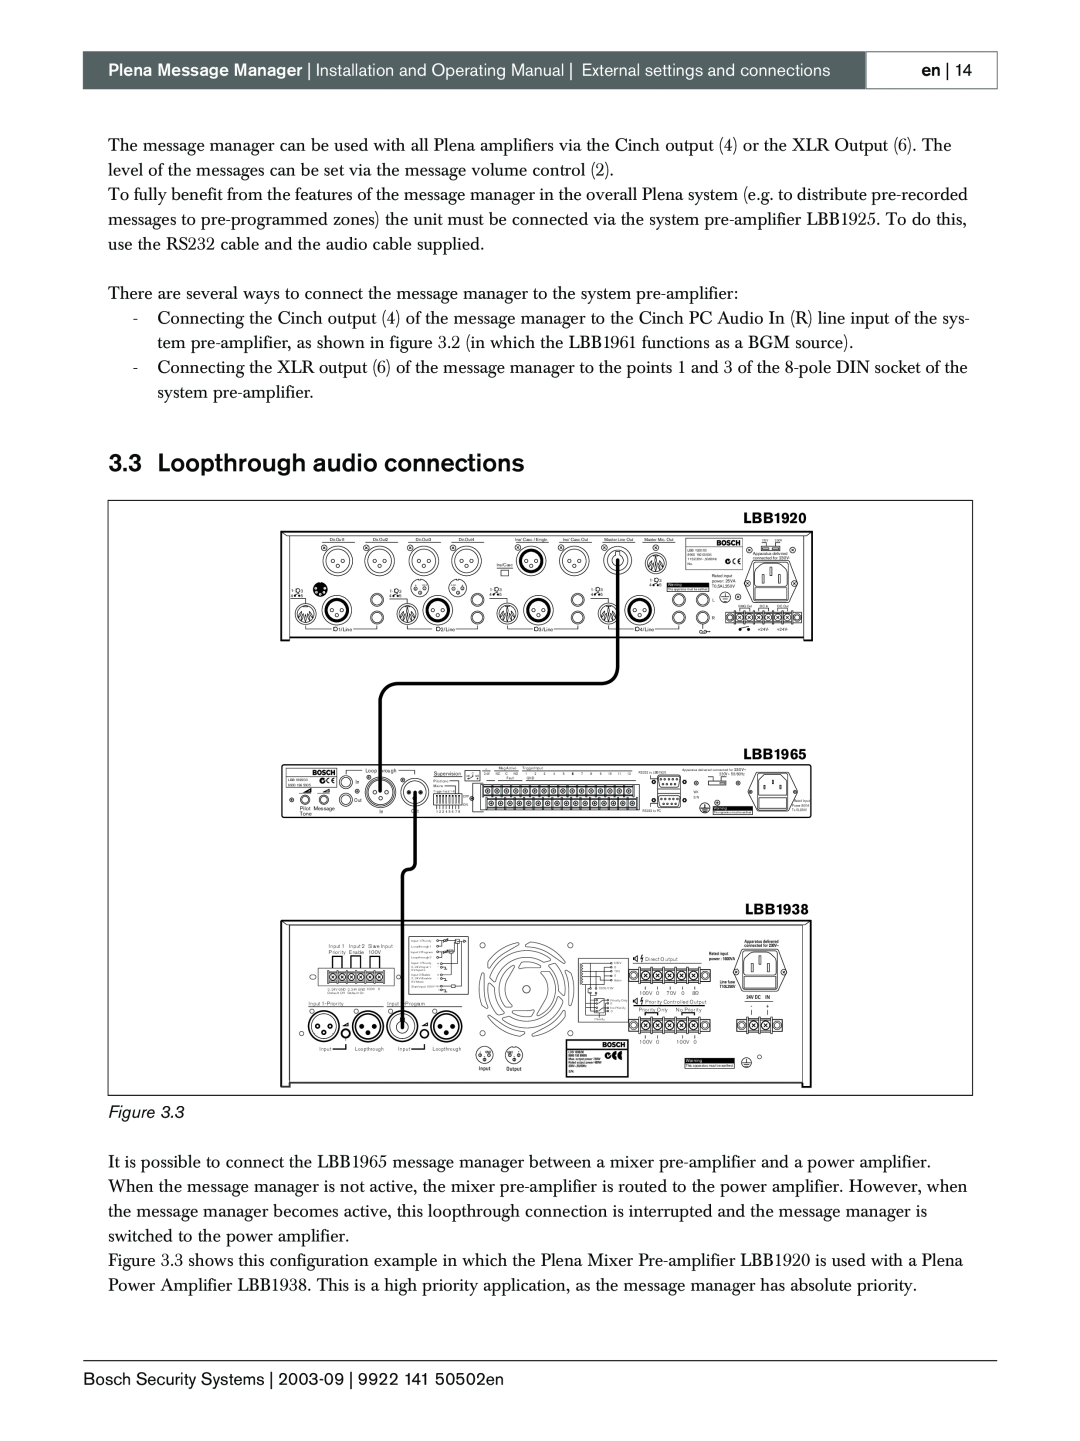 Bosch Appliances LBB 1965 manual Loopthrough audio connections, LBB1920, LBB1965, LBB1938 